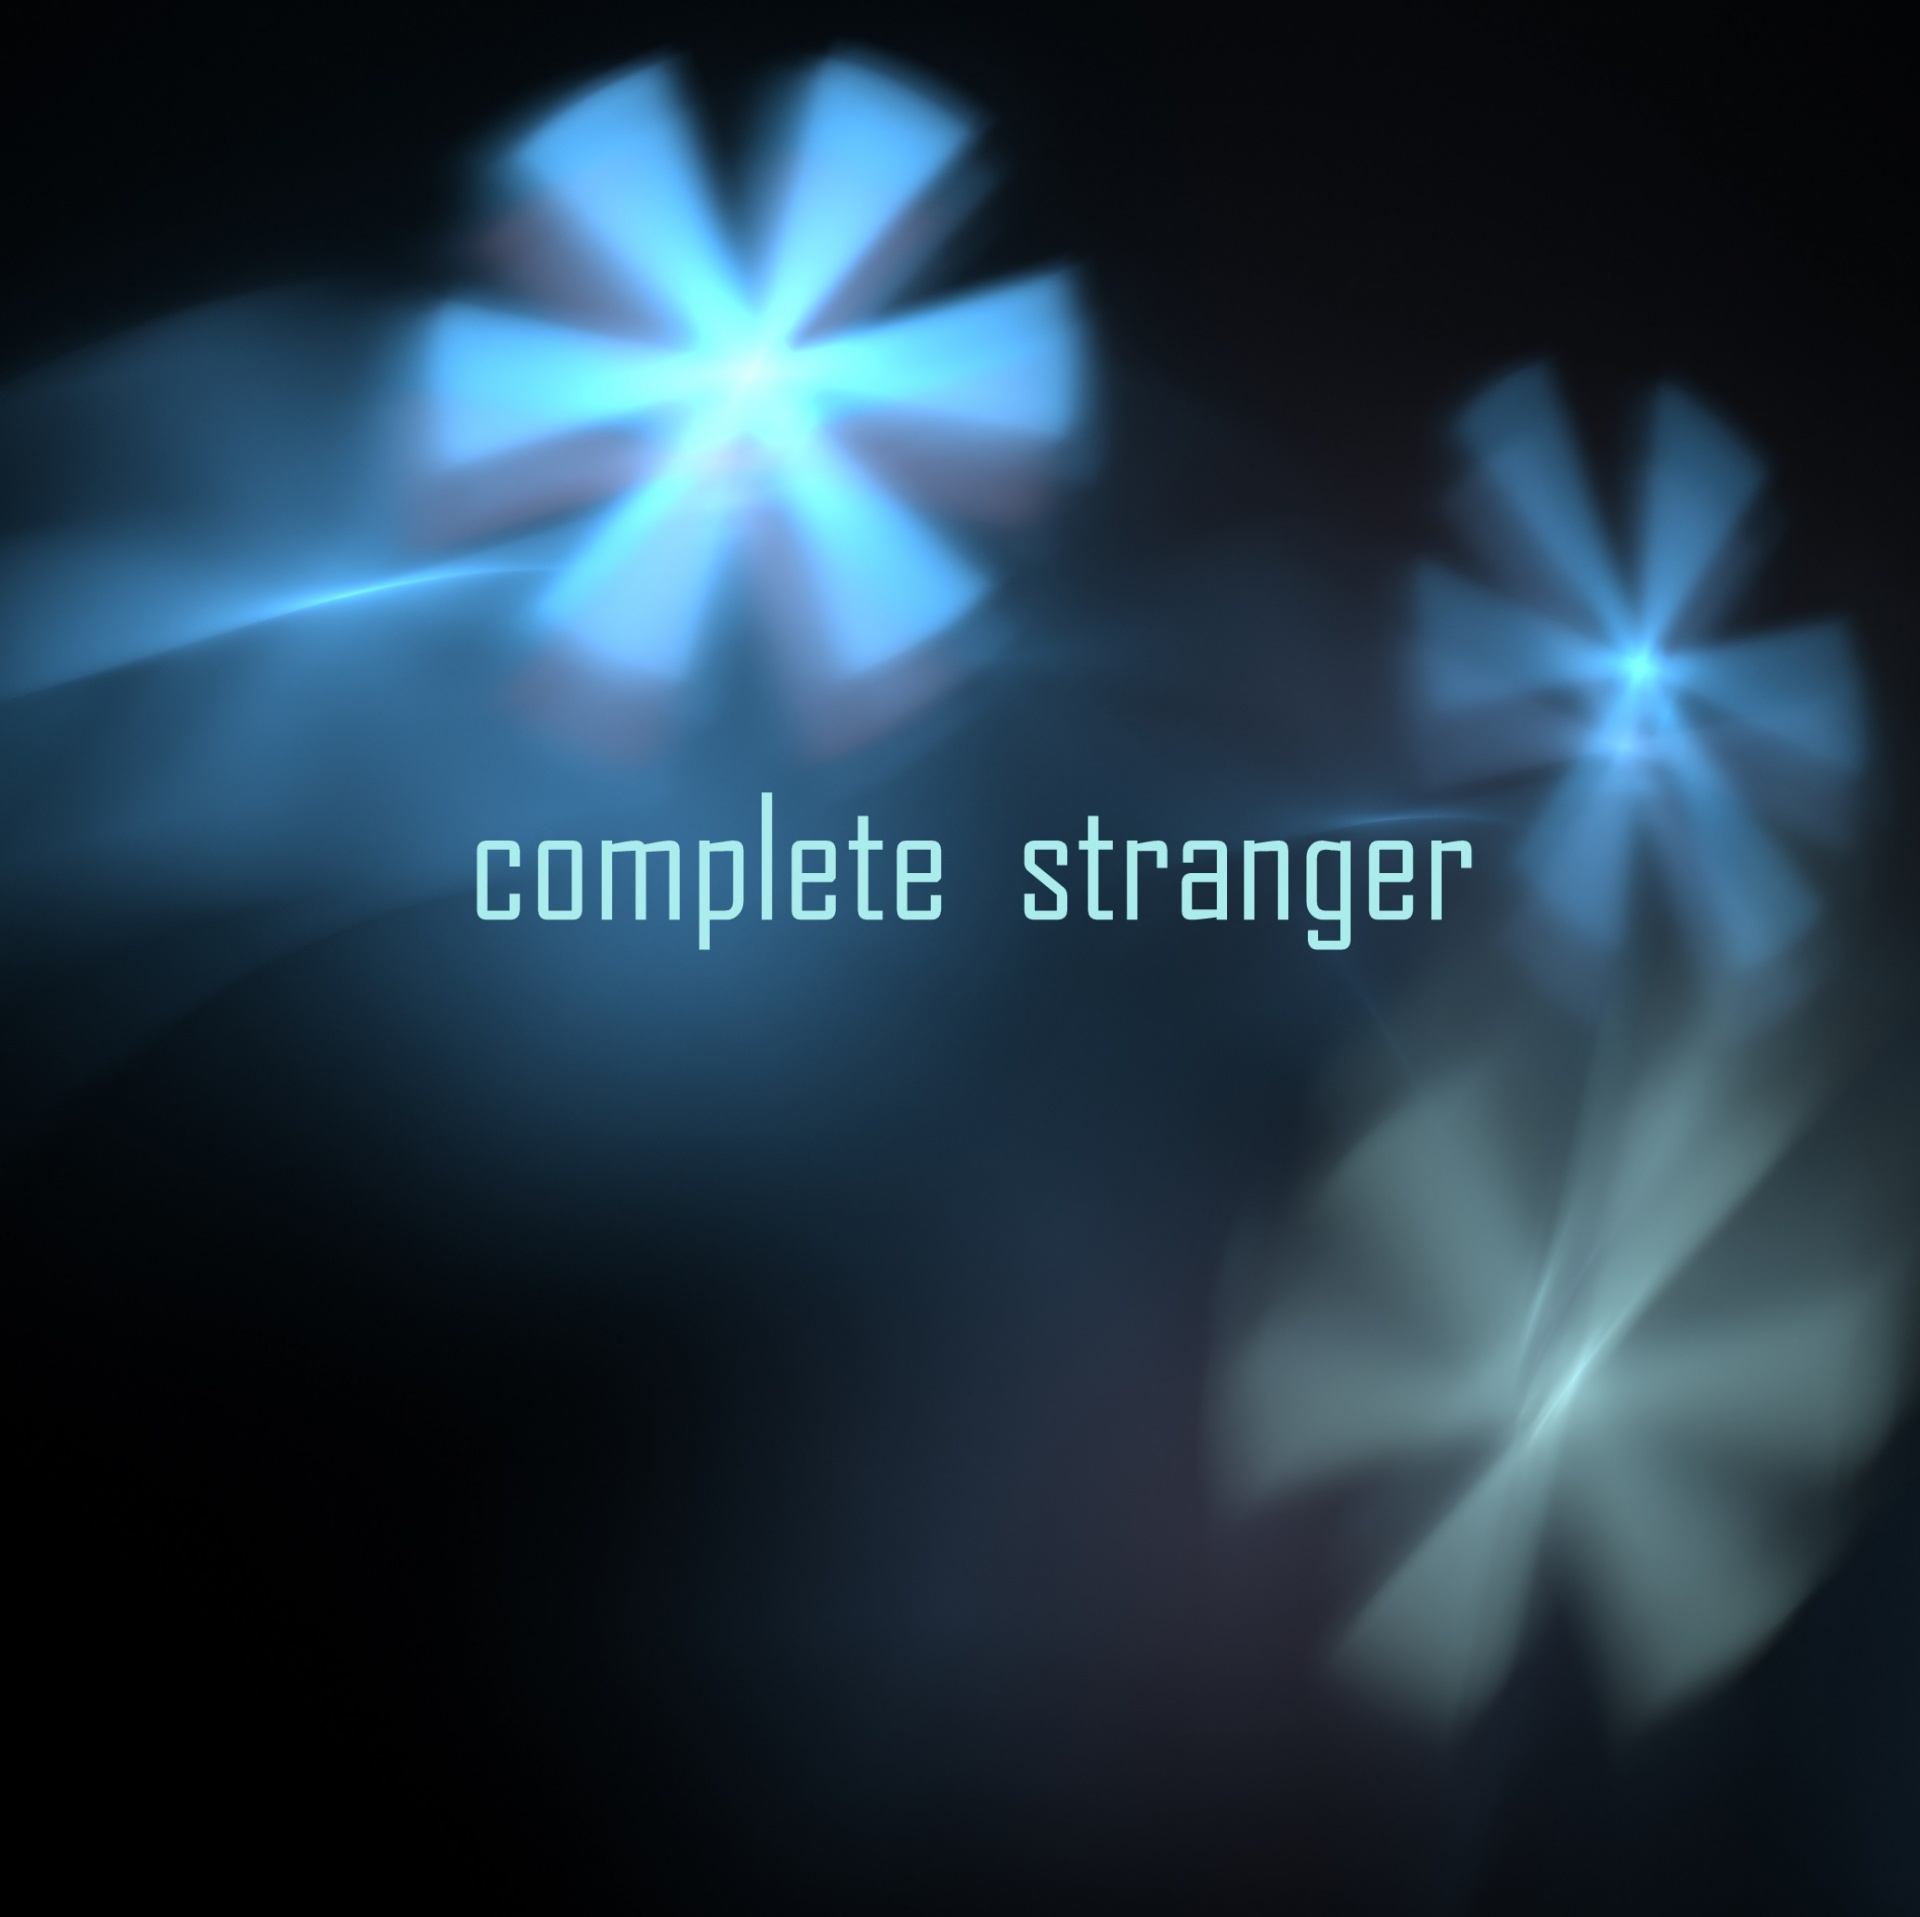 complete stranger complete stranger free photo